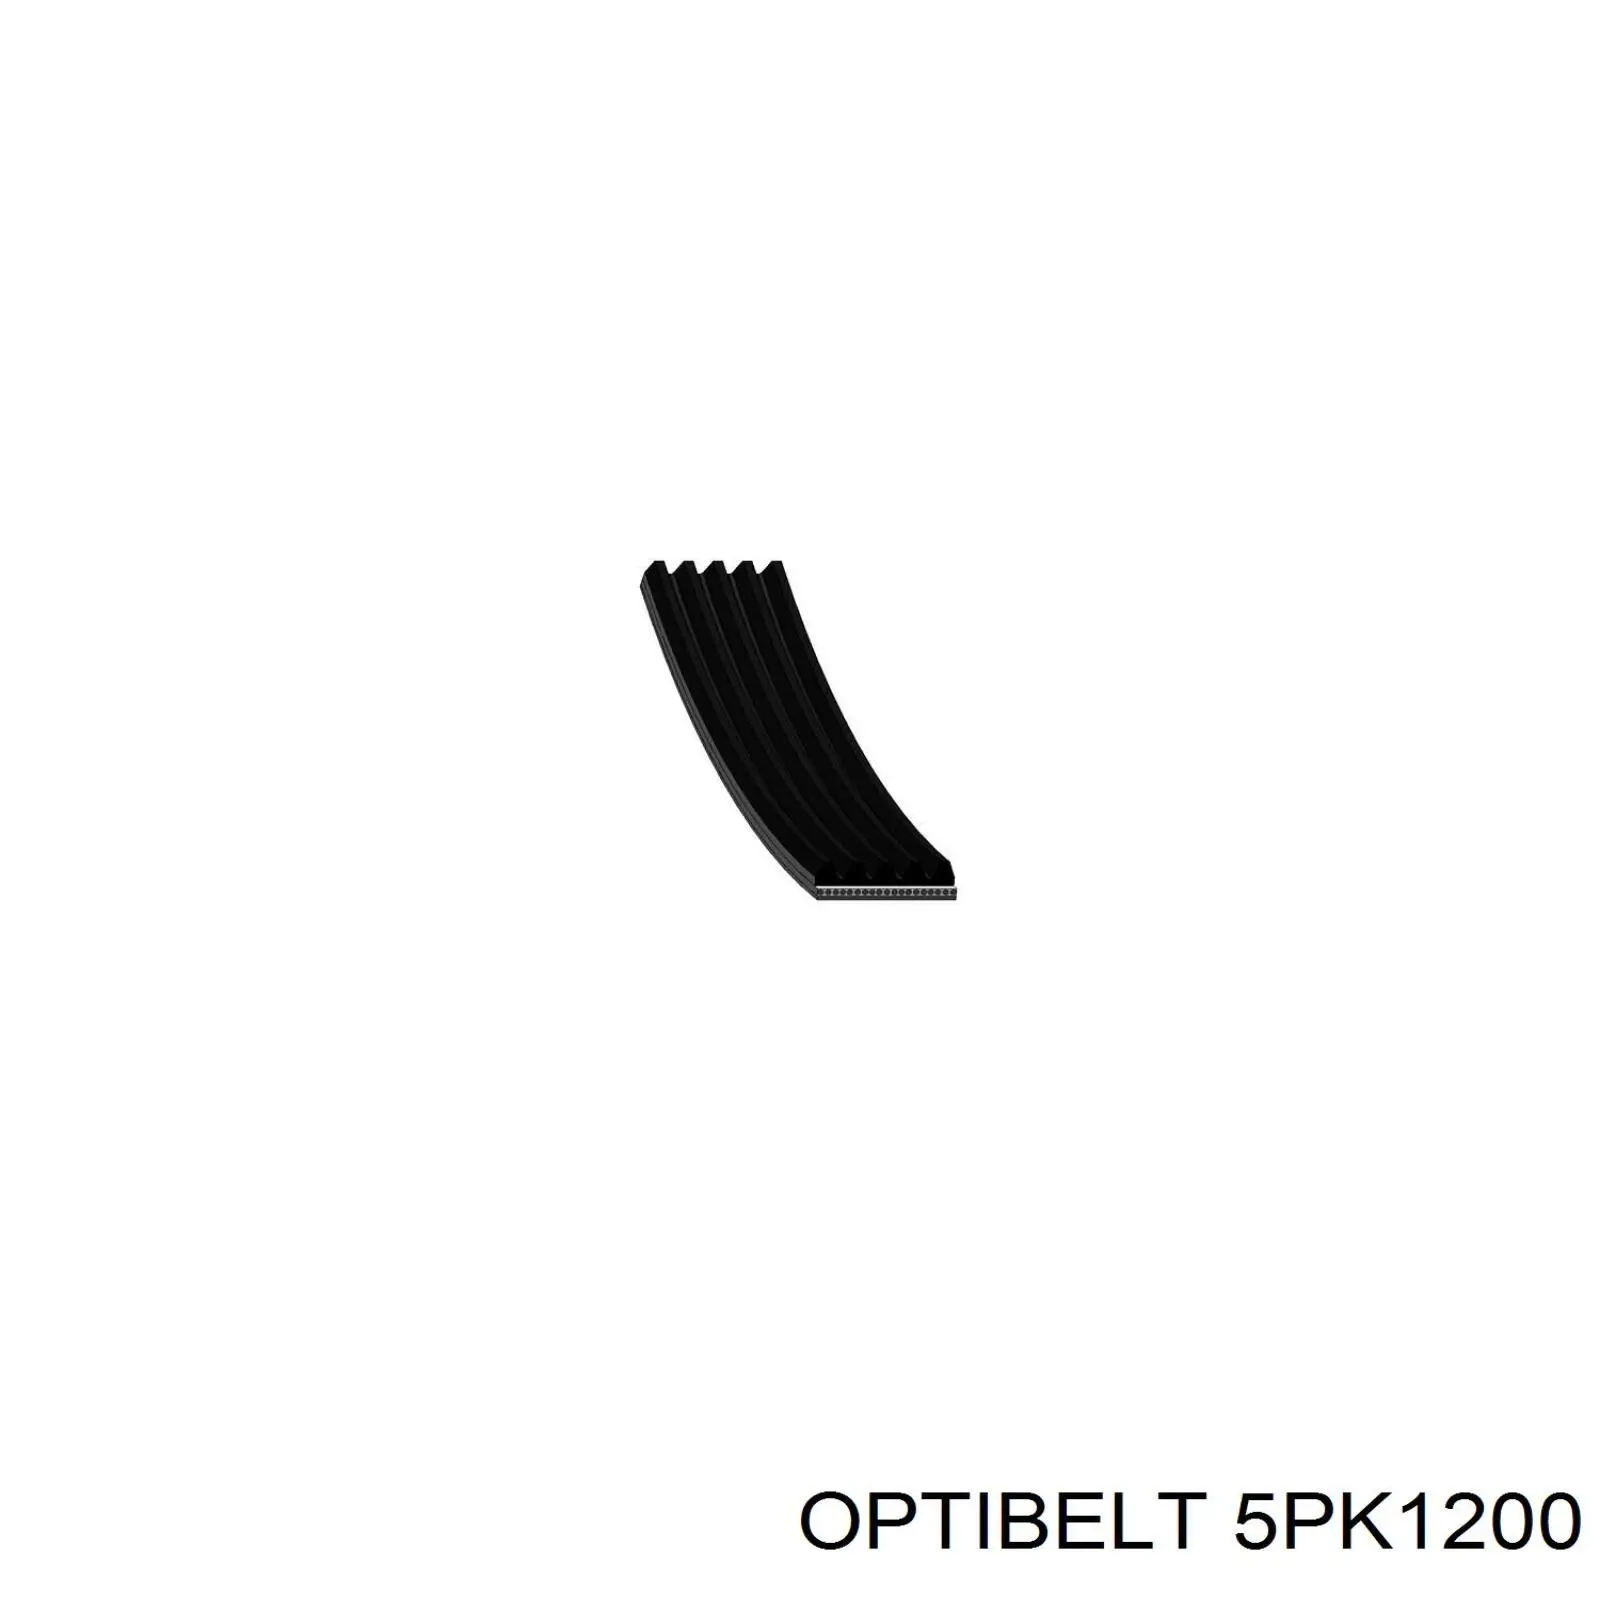 5PK1200 Optibelt correa trapezoidal